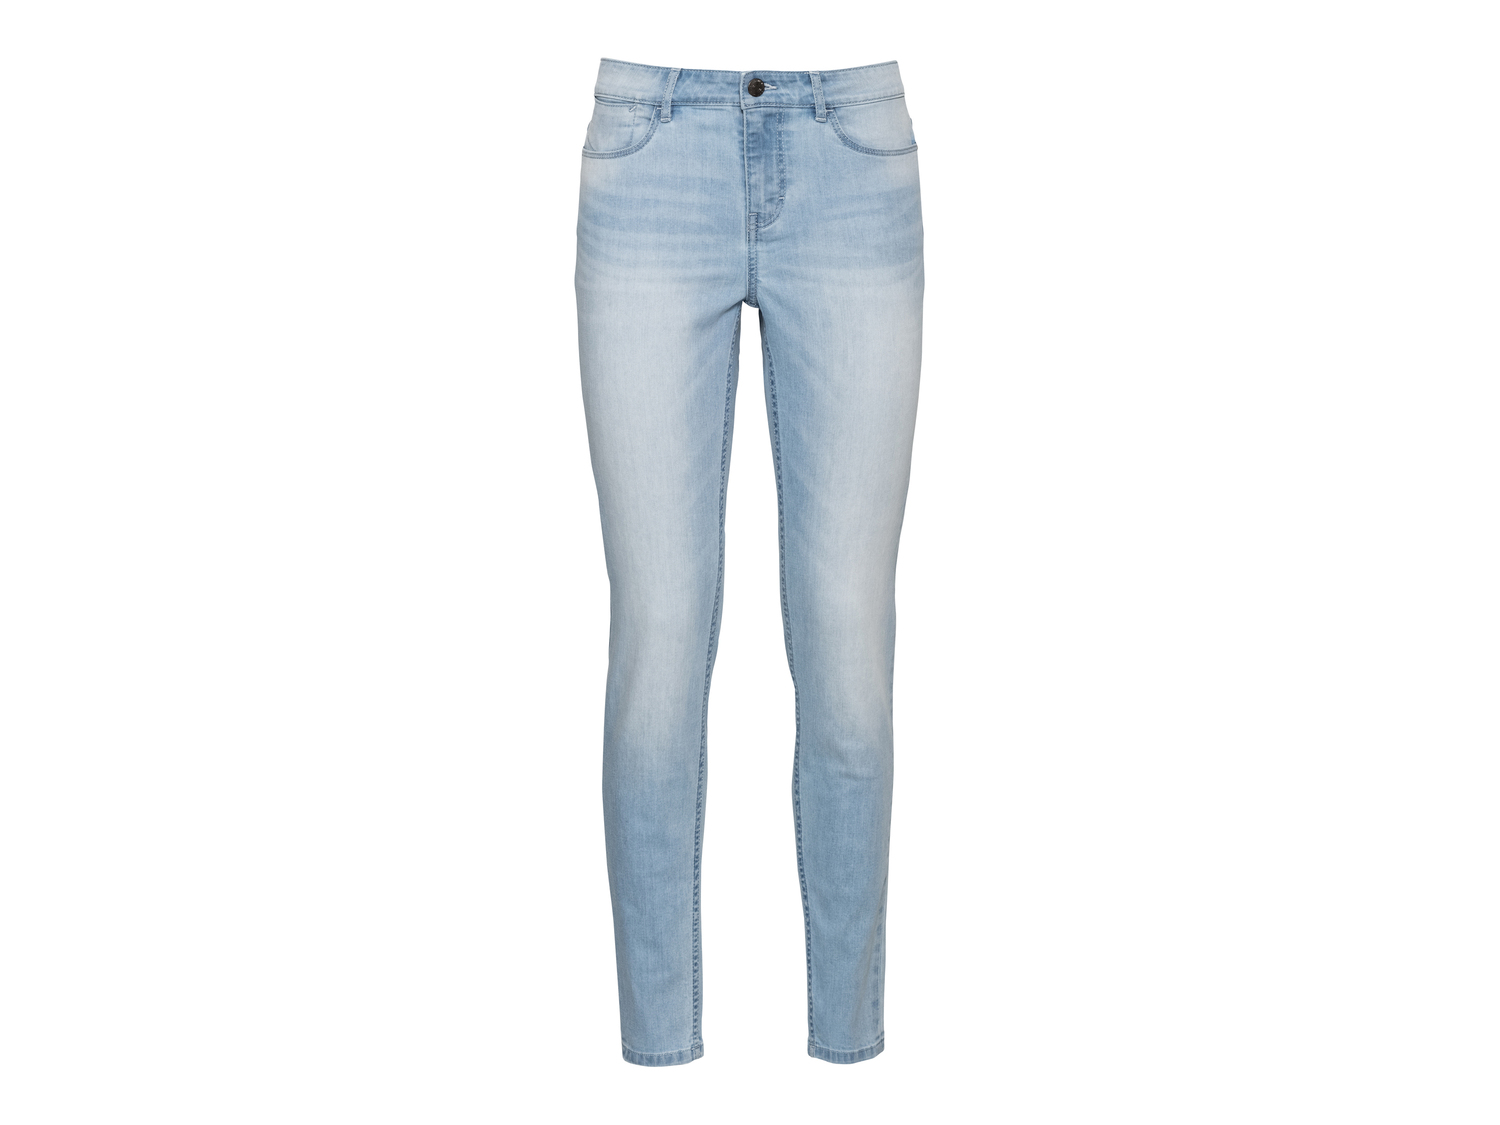 Jeans da donna Super Skinny Fit Esmara, prezzo 11.99 &#8364; 
Misure: 38-46
Taglie ...